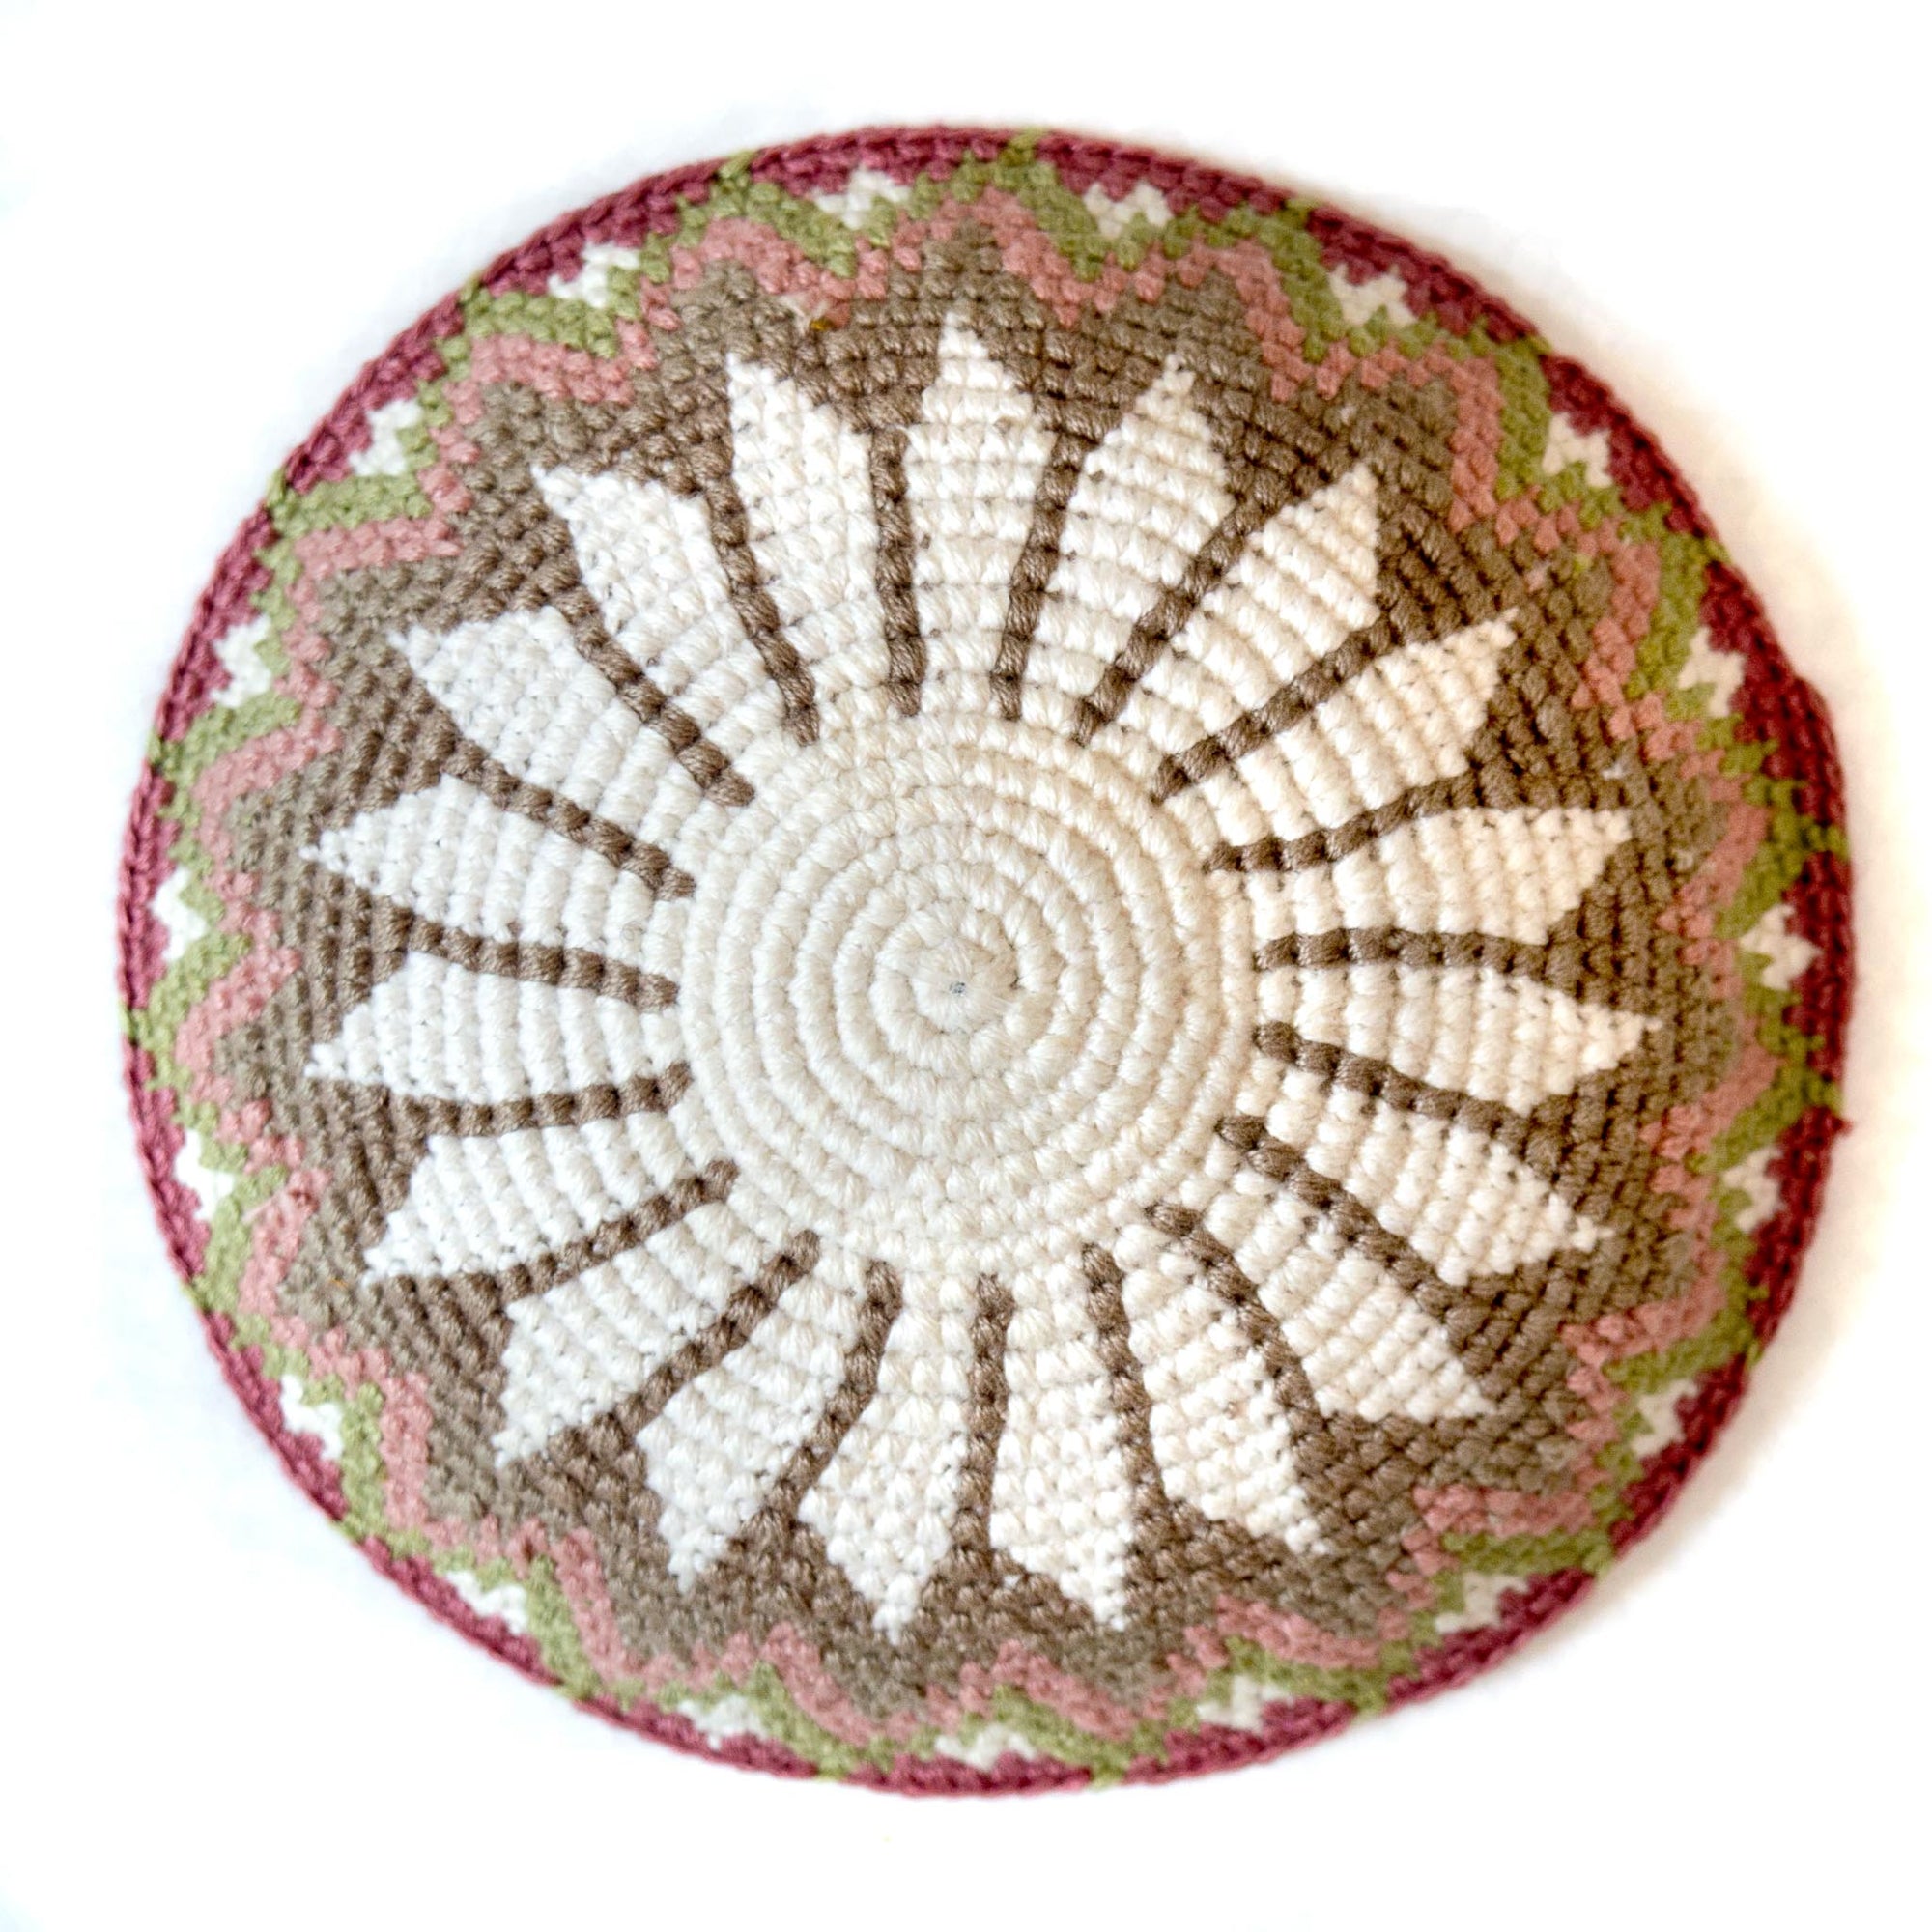 handmade fair trade kippah in soft pink and white tones